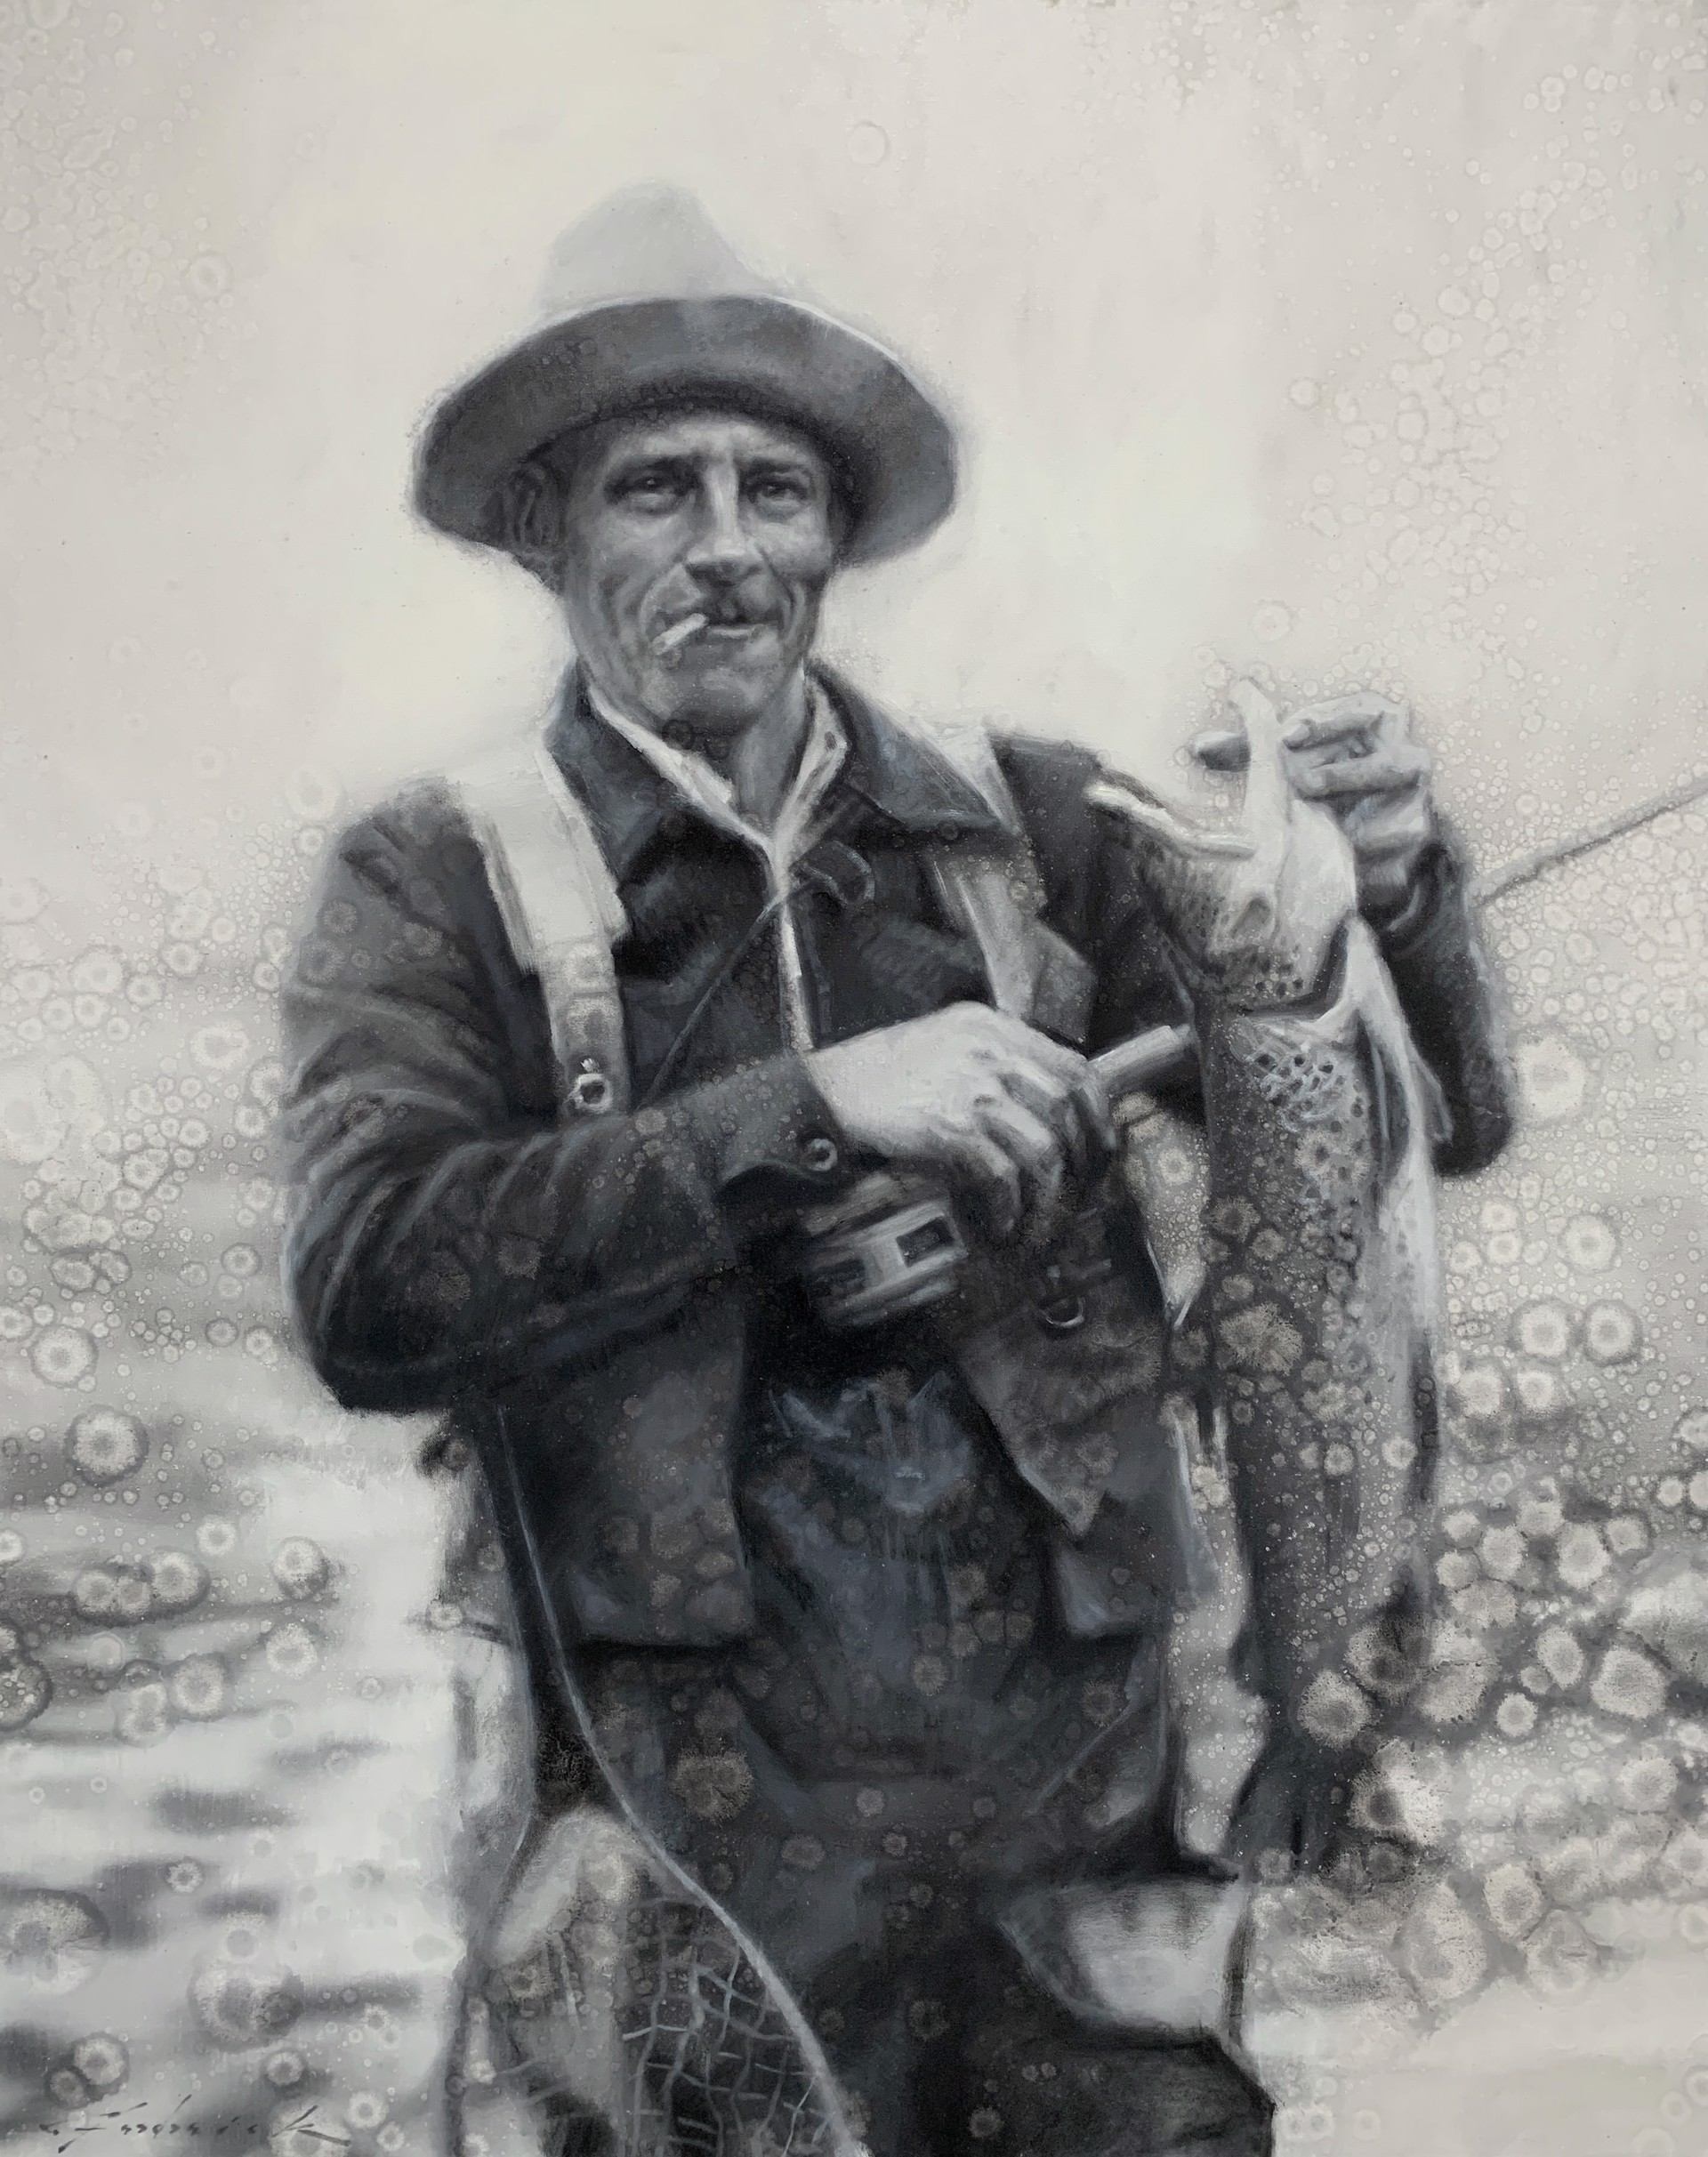 FISH TALE by David Frederick Riley